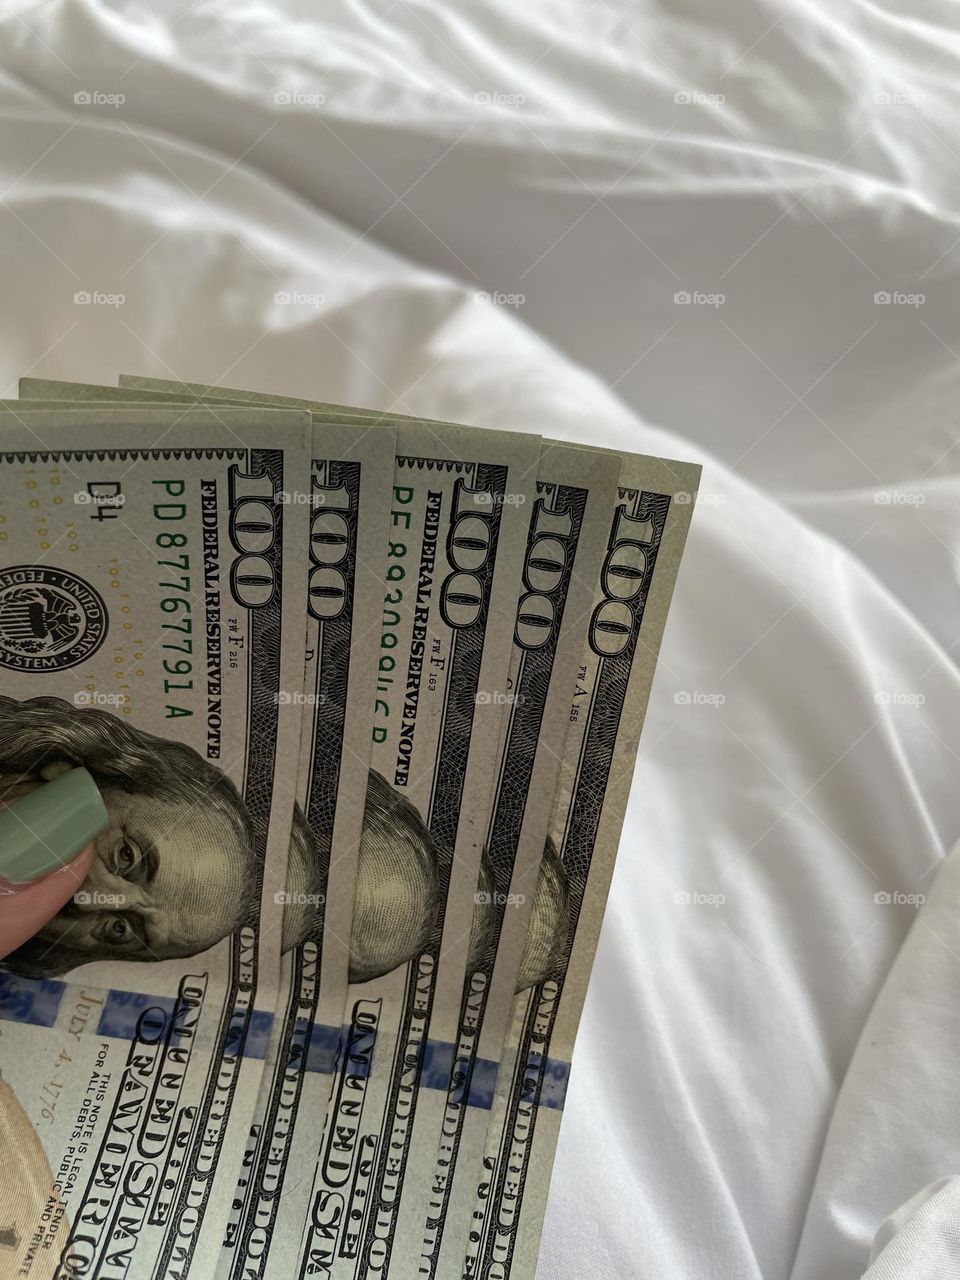 Holding dollar cash over white bed sheet